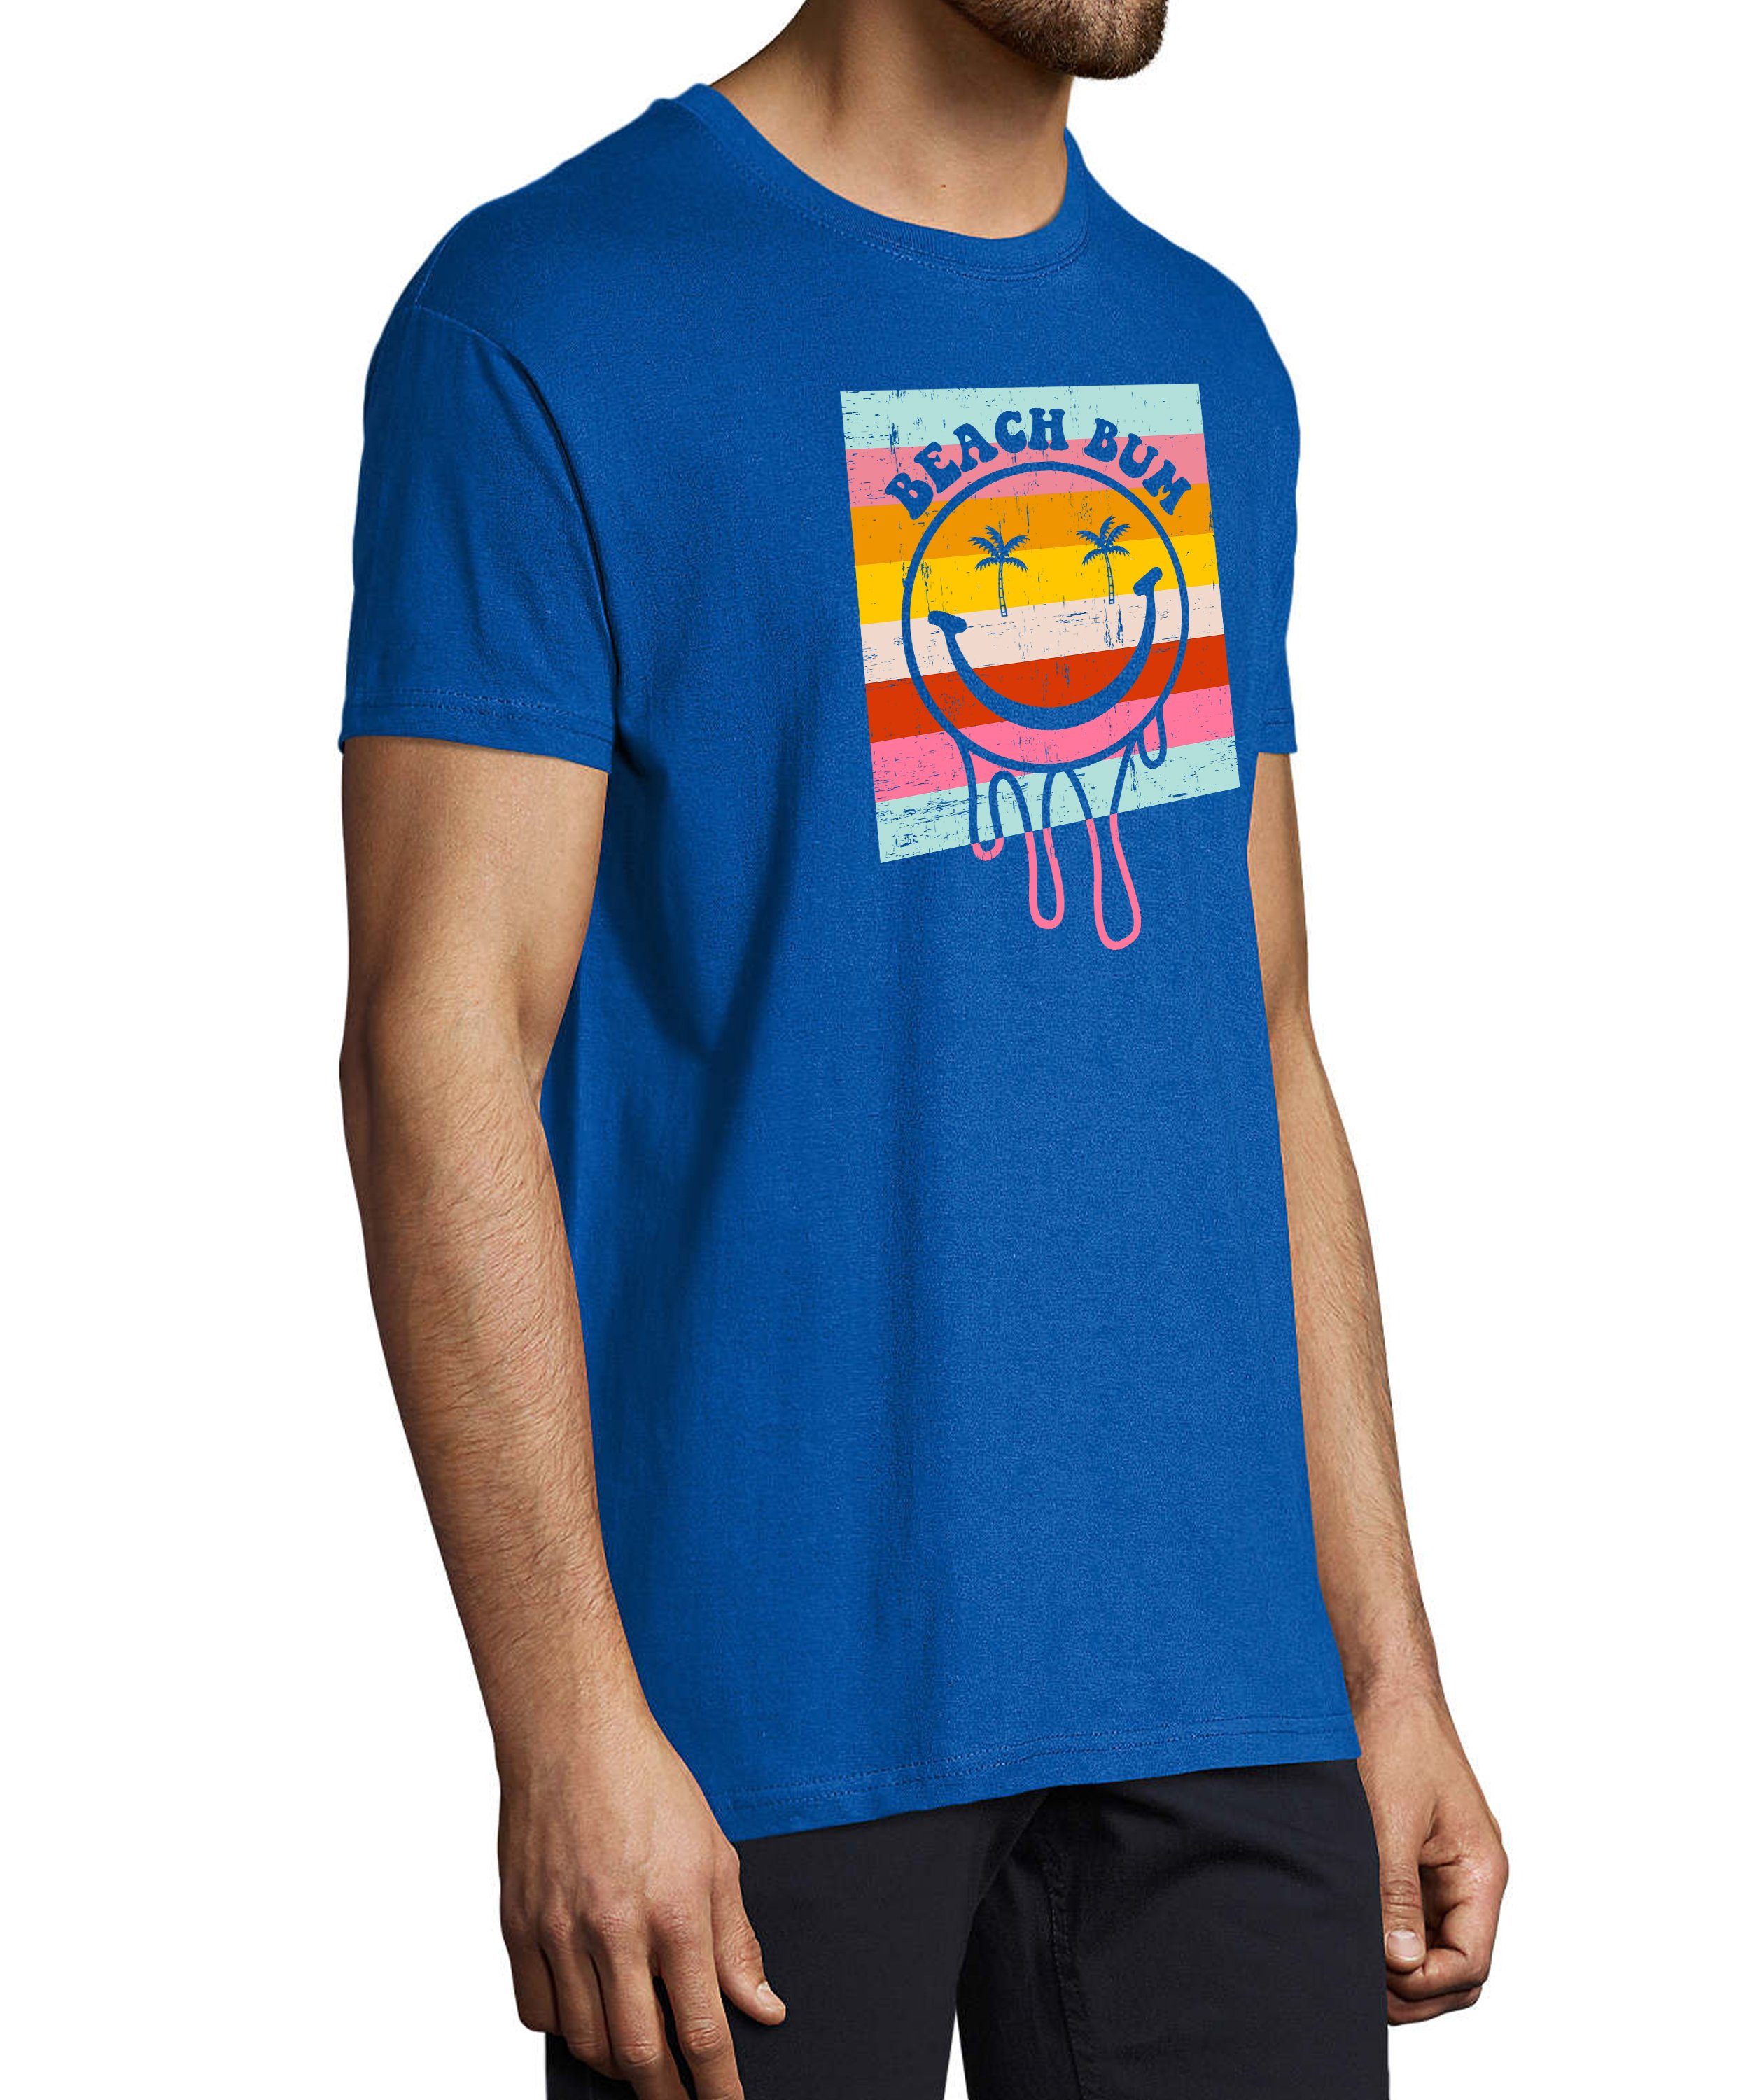 Smiley Herren T-Shirt Bunter blau mit Regular i291 MyDesign24 Print Aufdruck Shirt Smiley - Fit, Beach Baumwollshirt Bum royal